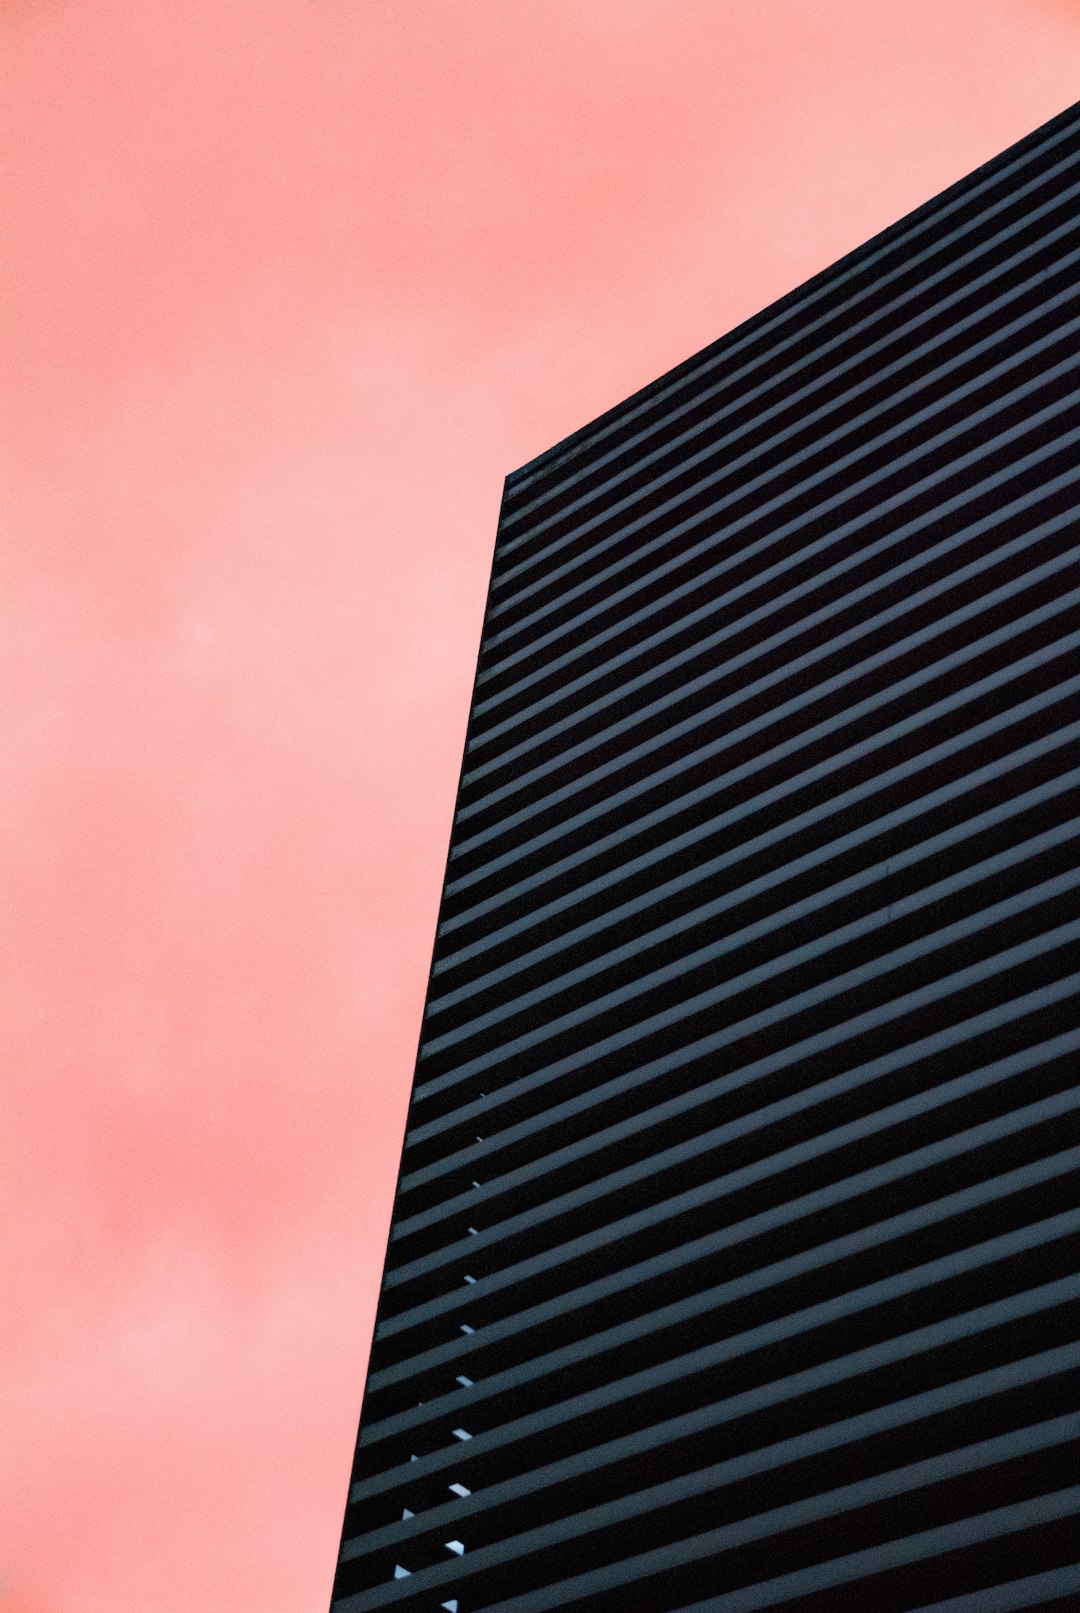 black high rise building under blue sky